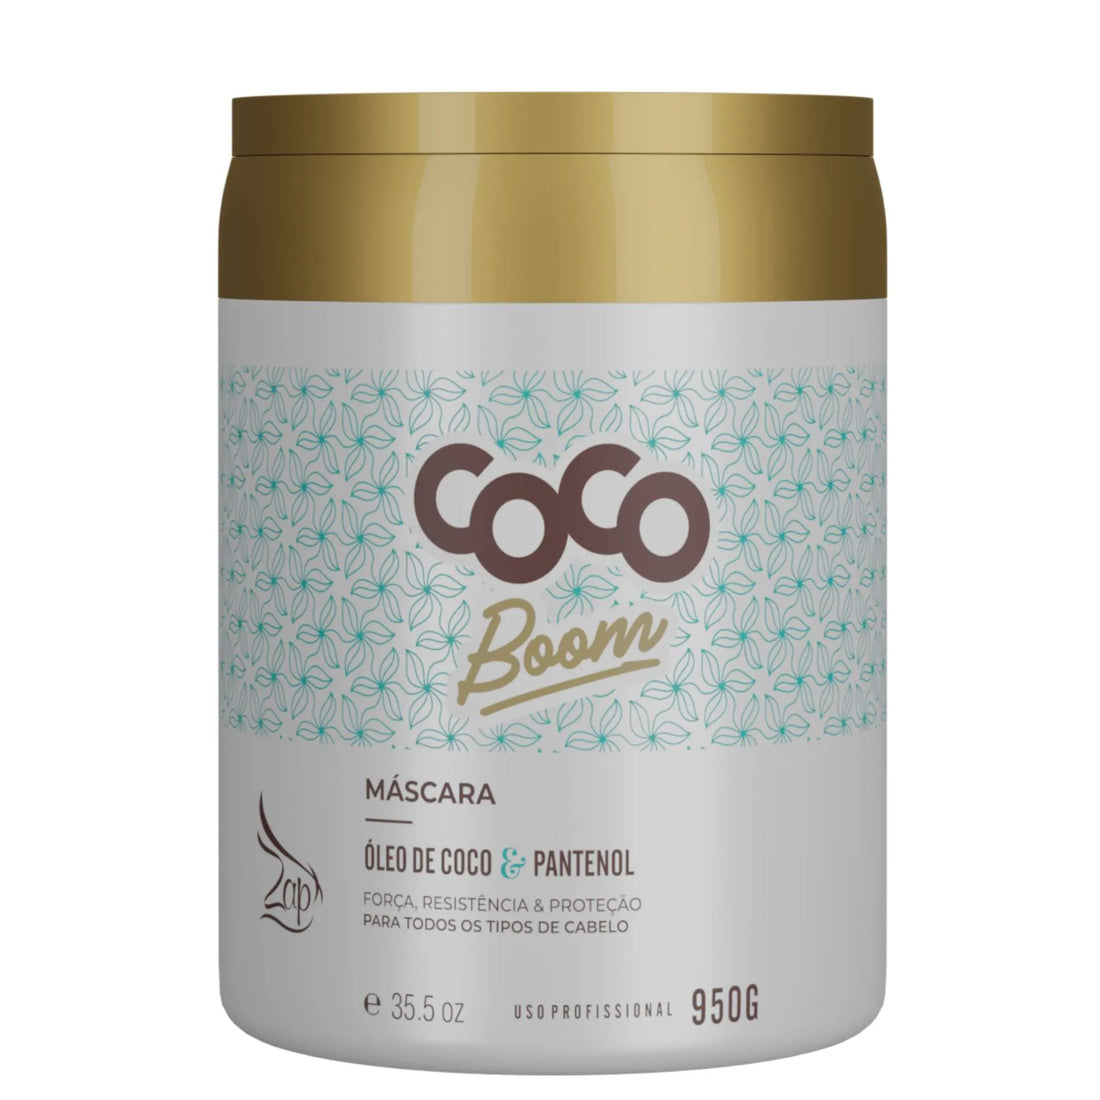 Zap Cosmeticos, Coco Boom, masque capillaire pour cheveux, 950g